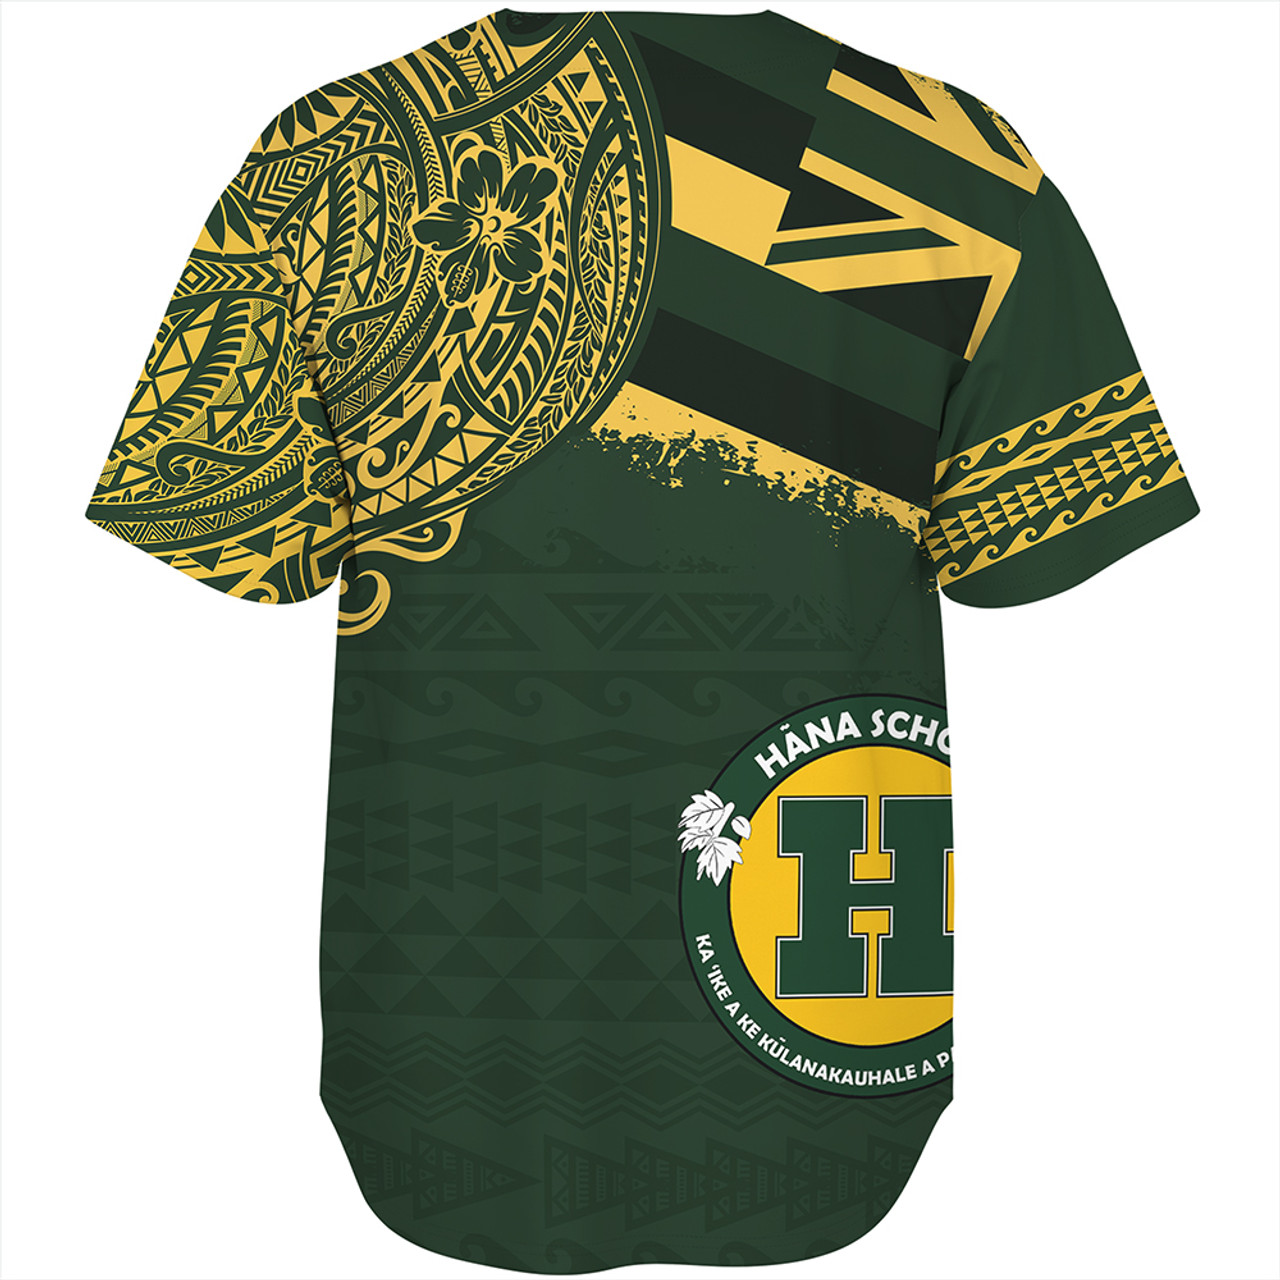 Hawaii Baseball Shirt Hana High And Elementary School With Crest Style